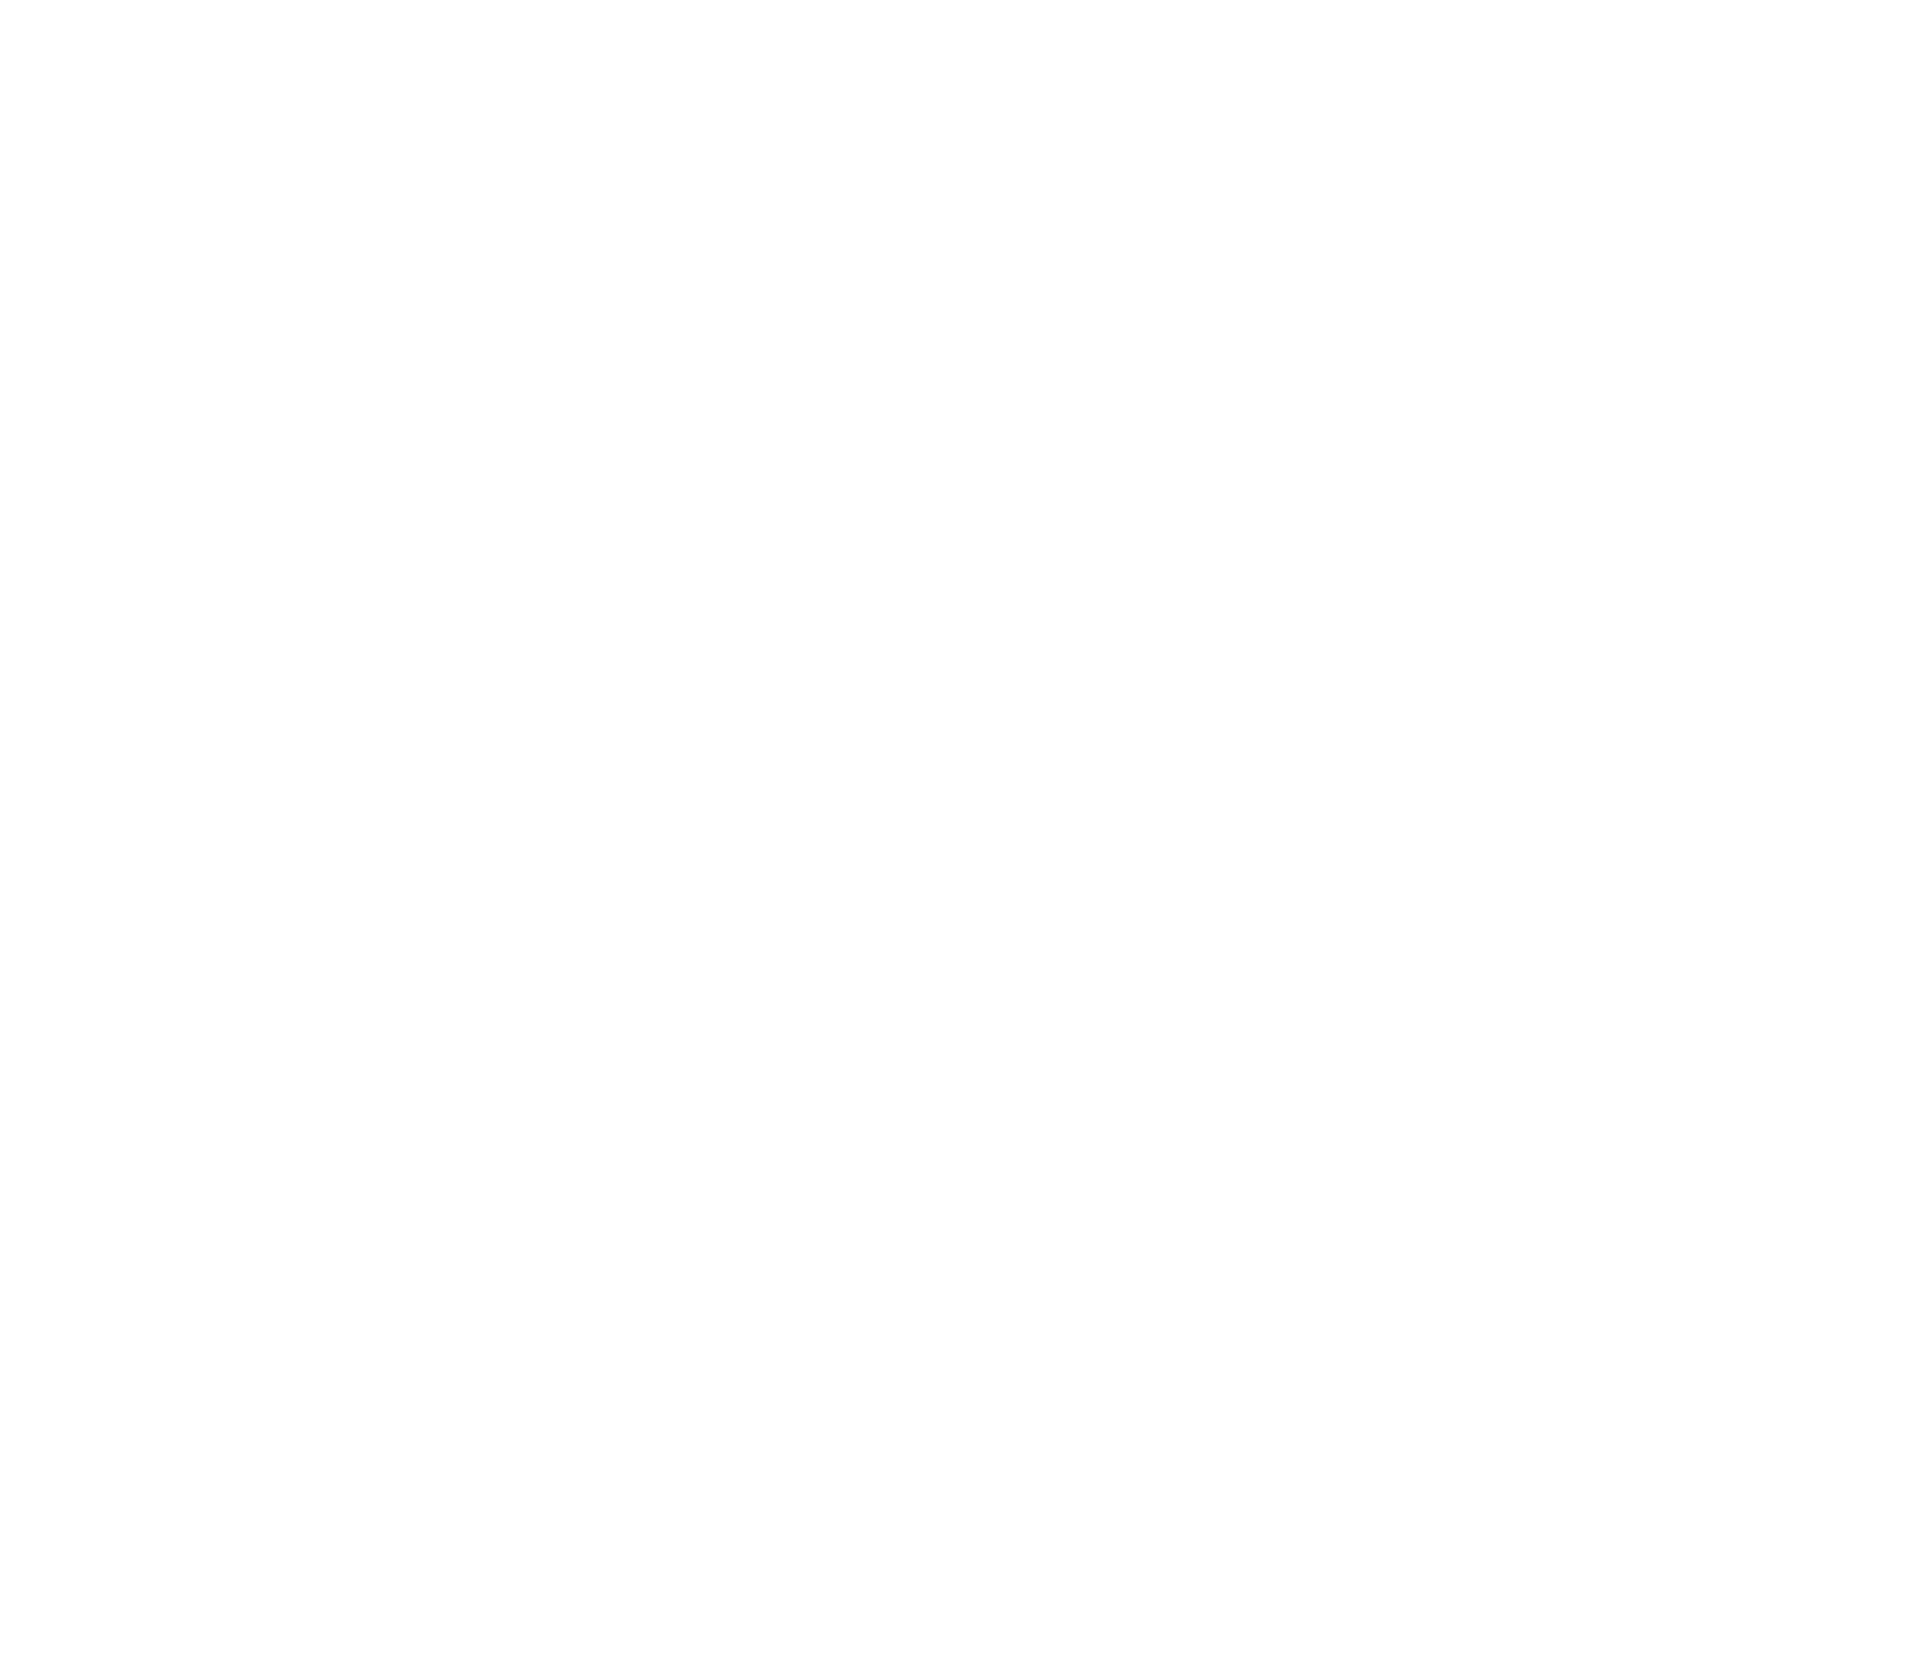 Gr8 Plate Hospitality Logo